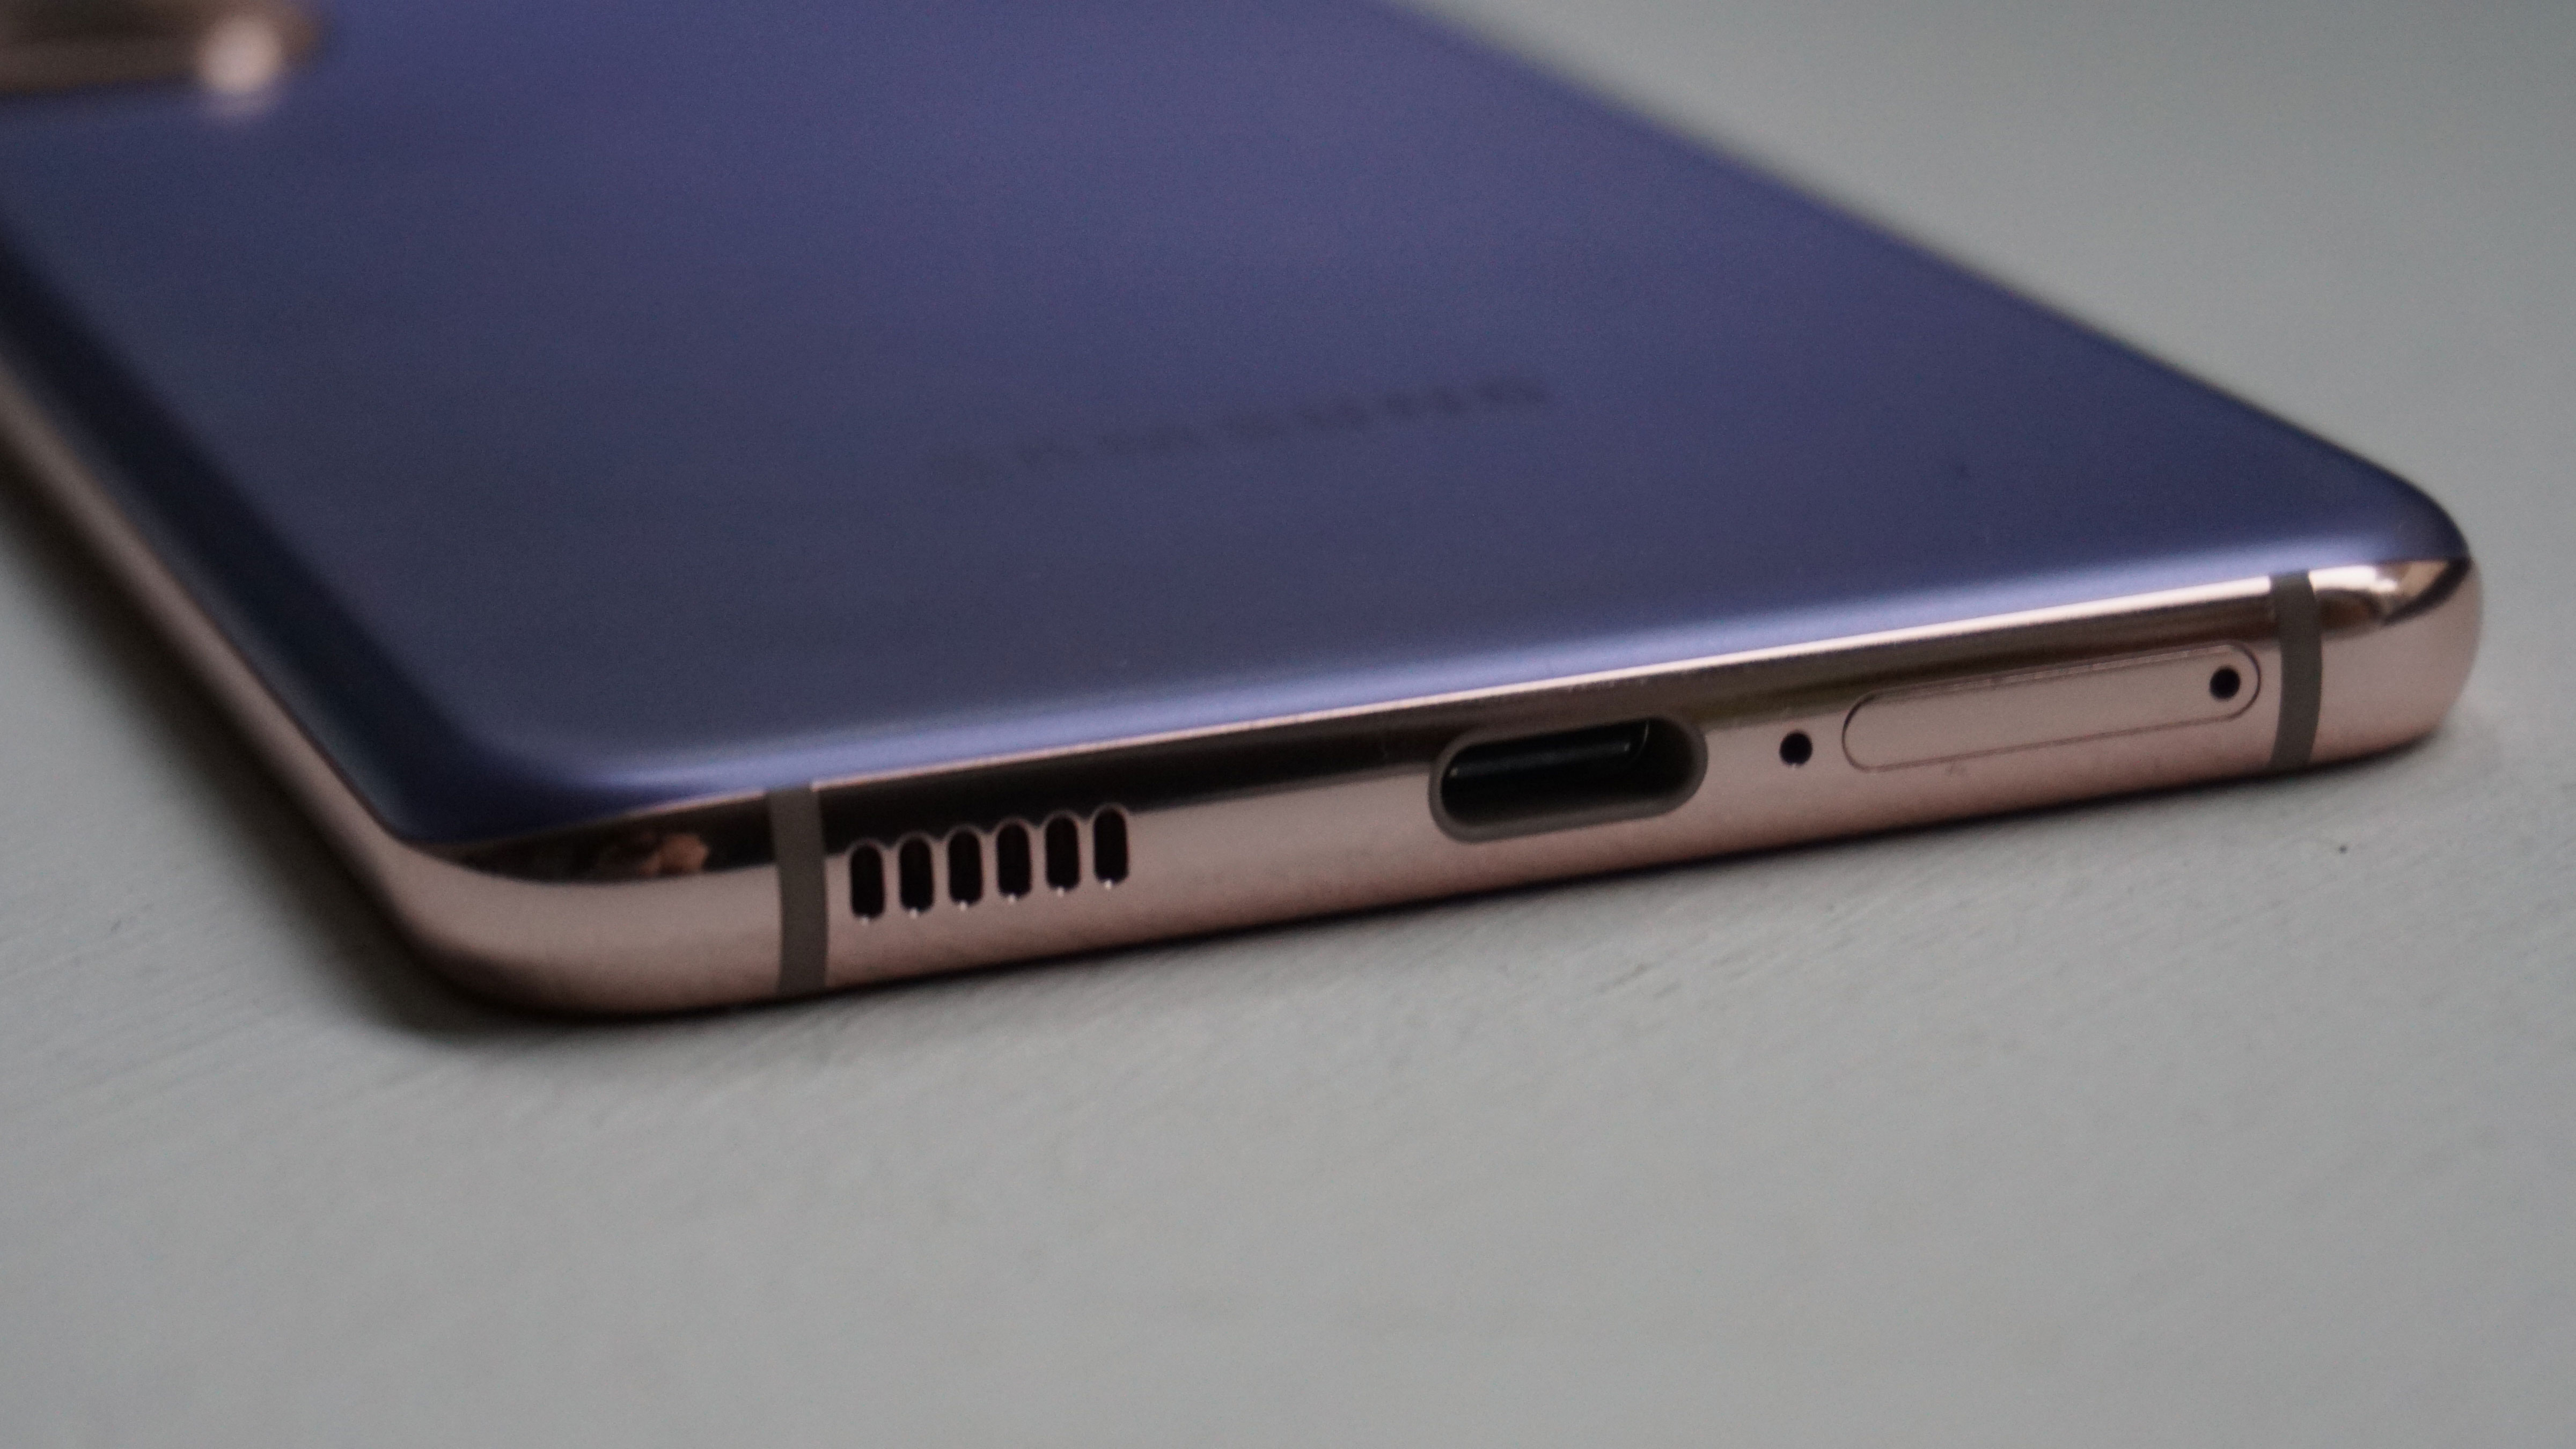 The bottom edge of a purple Samsung Galaxy S21